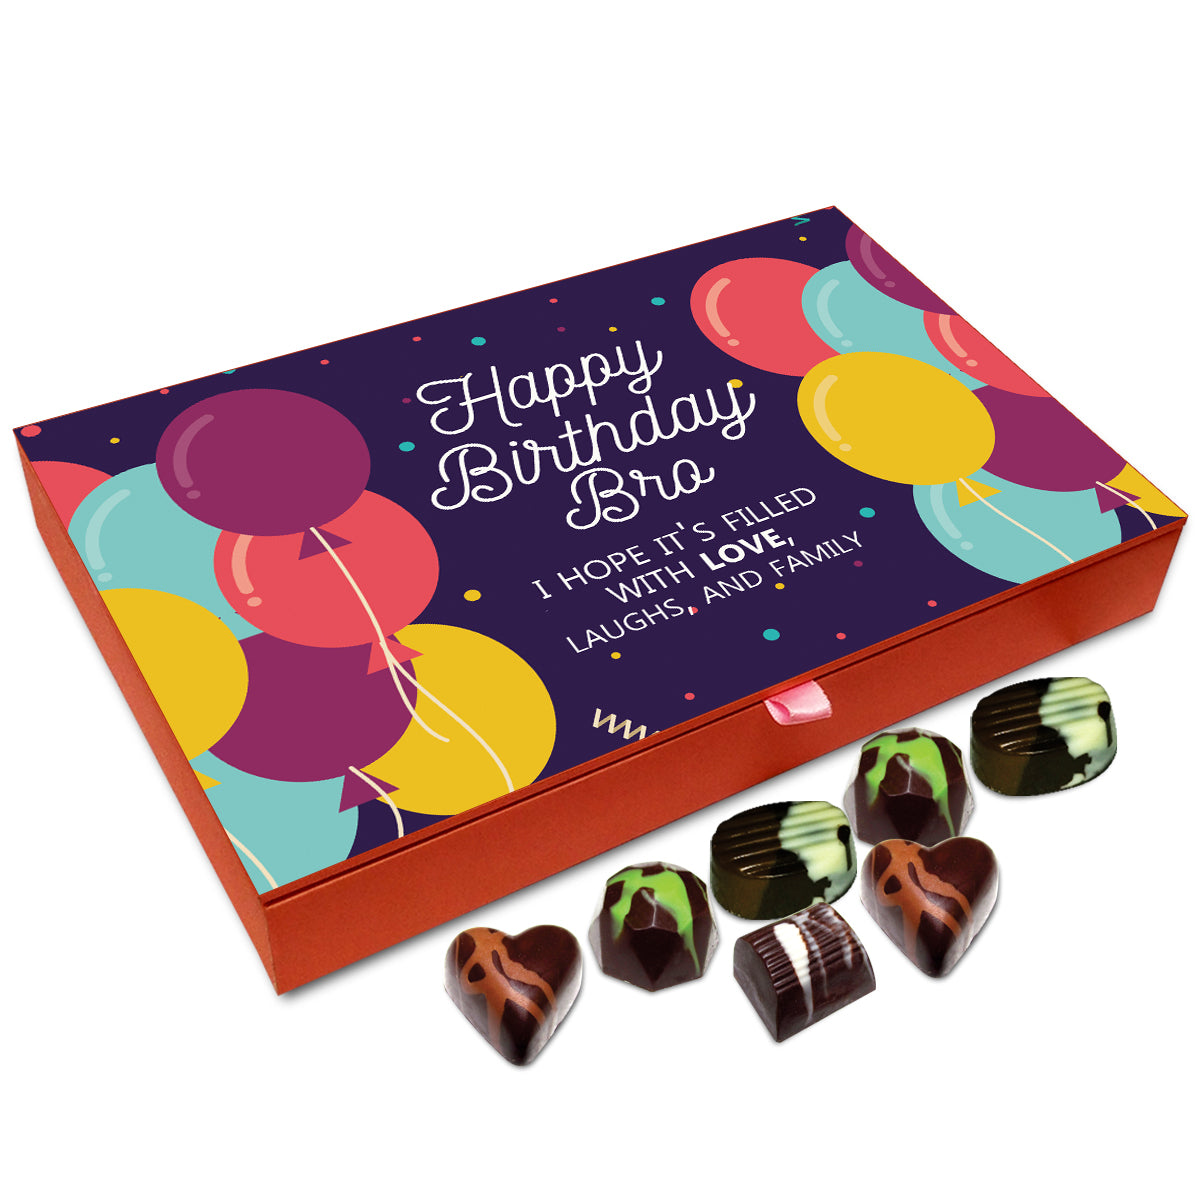 Hazel & Creme Chocolate Covered Pretzels - HAPPY BIRTHDAY Chocolate Gift Box  - Birthday Food Gifts - Gourmet Food